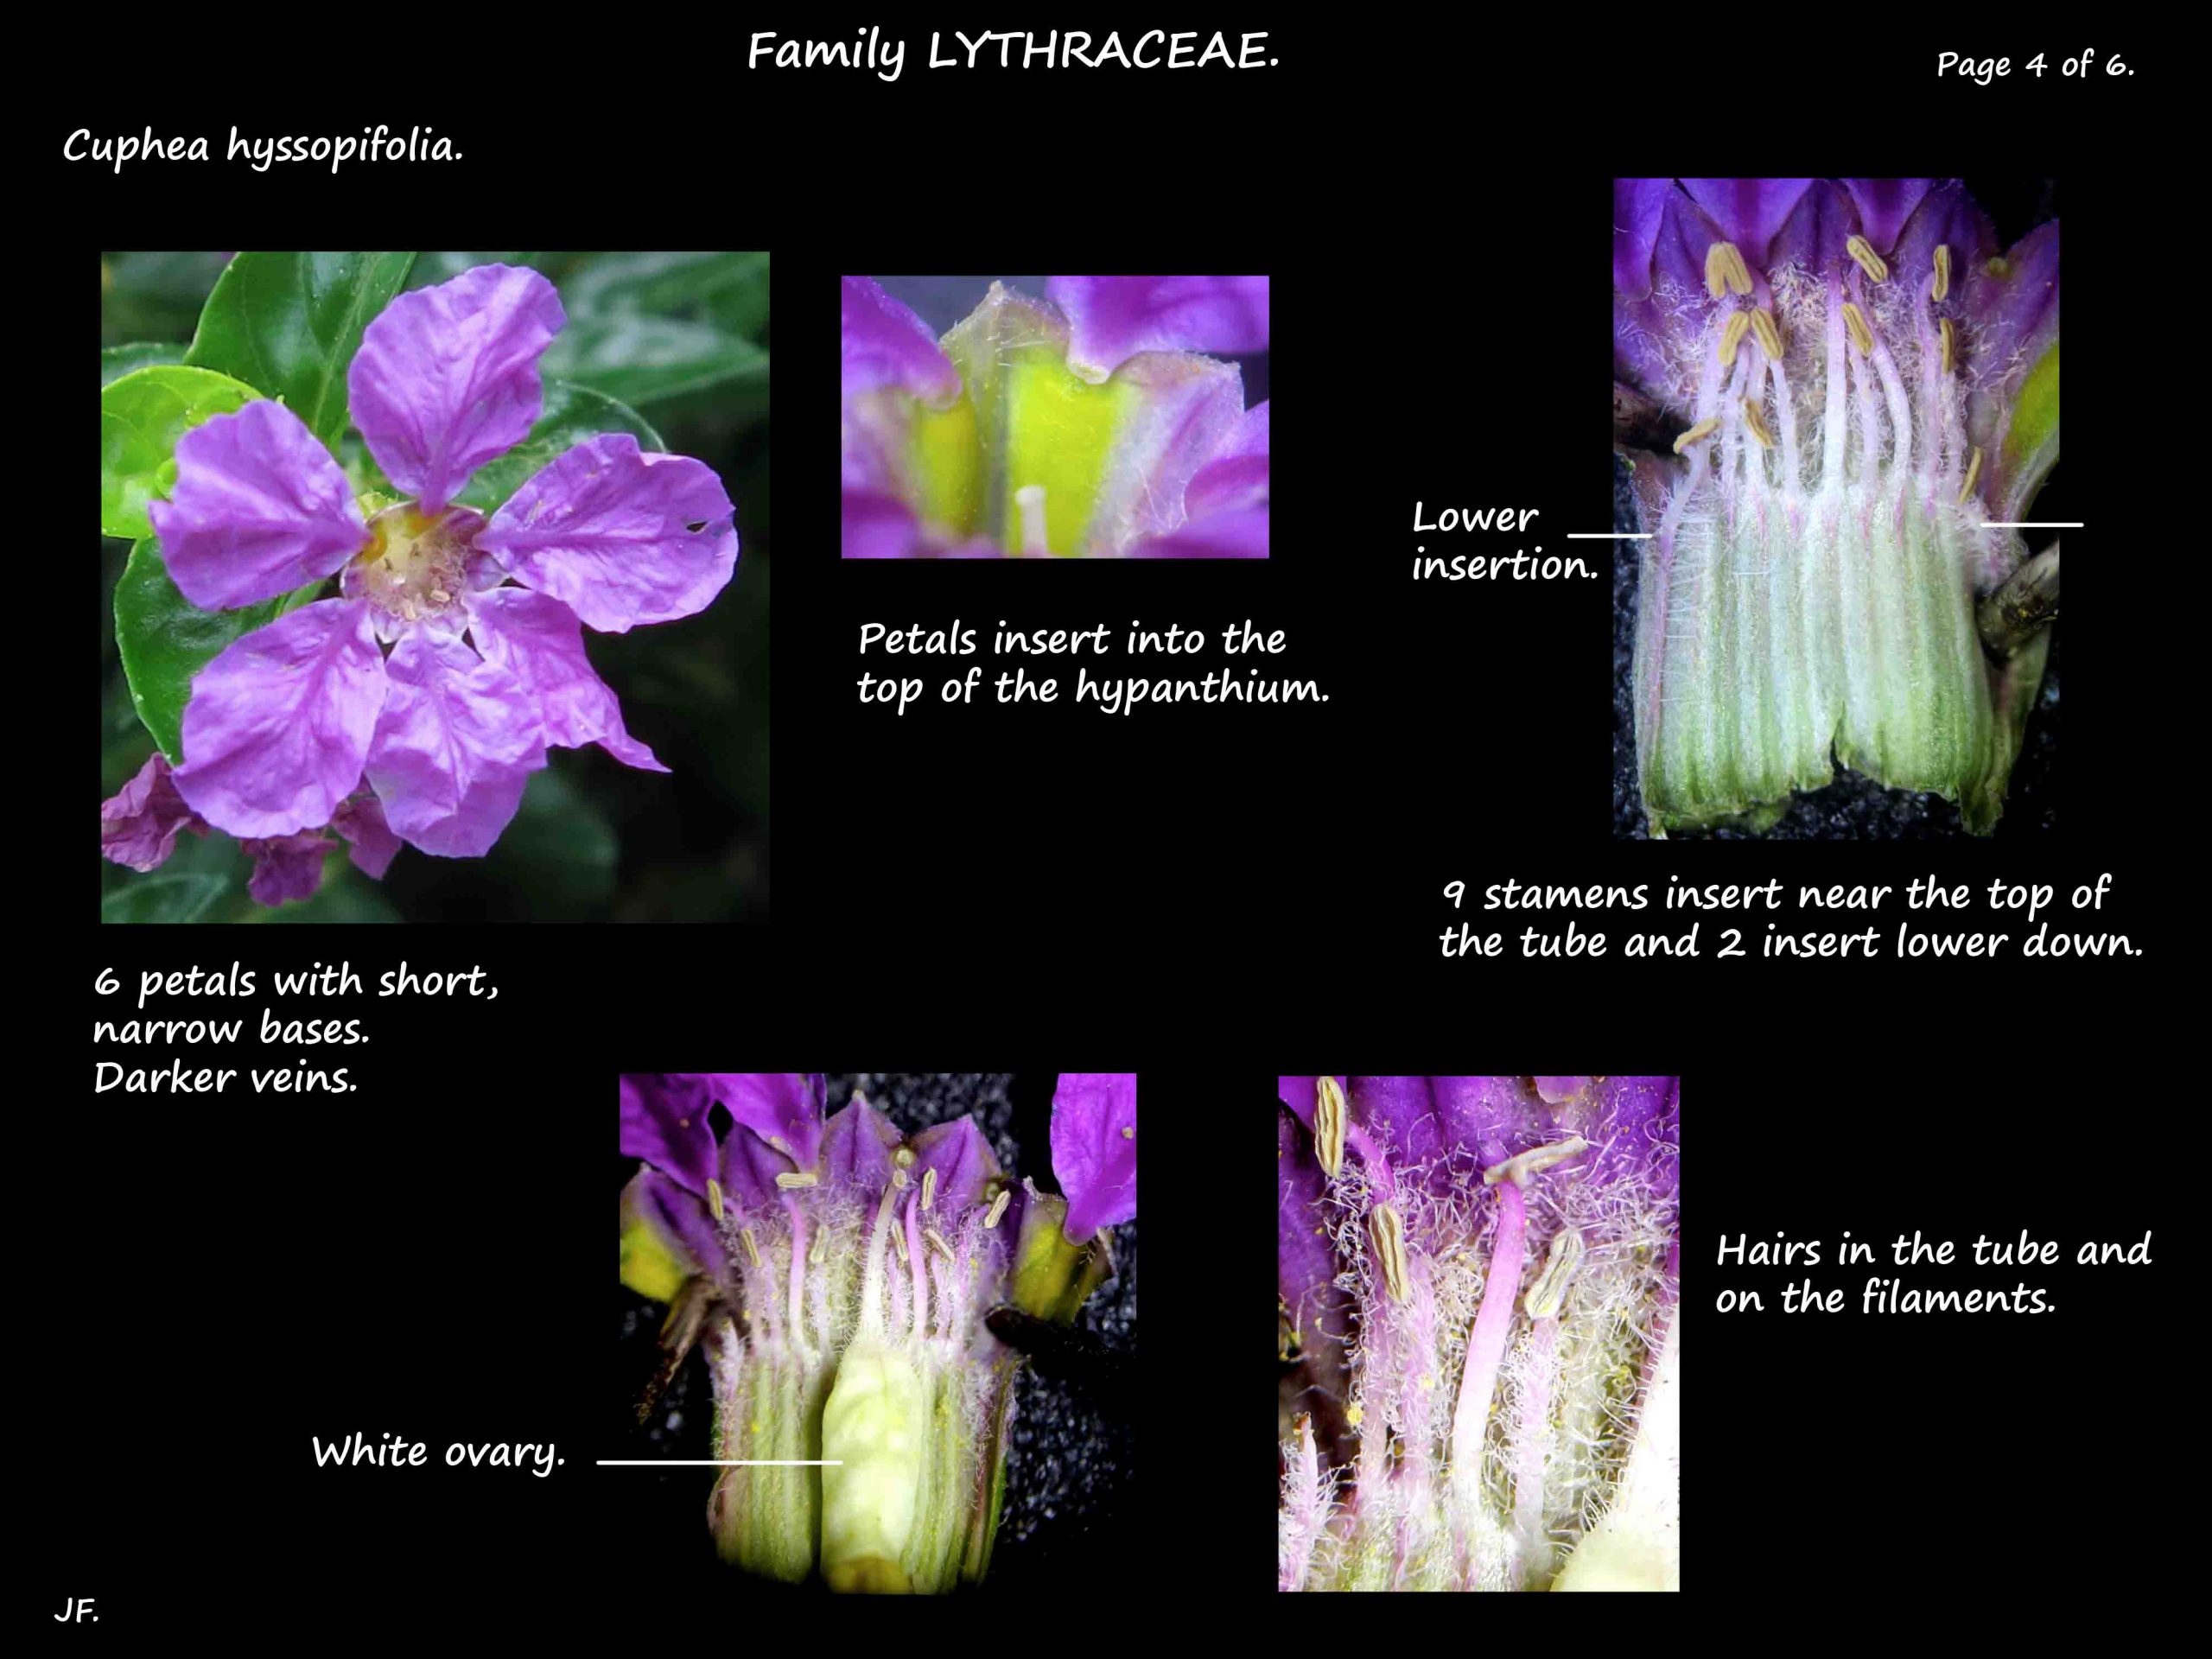 4 Cuphea hypanthium & stamens